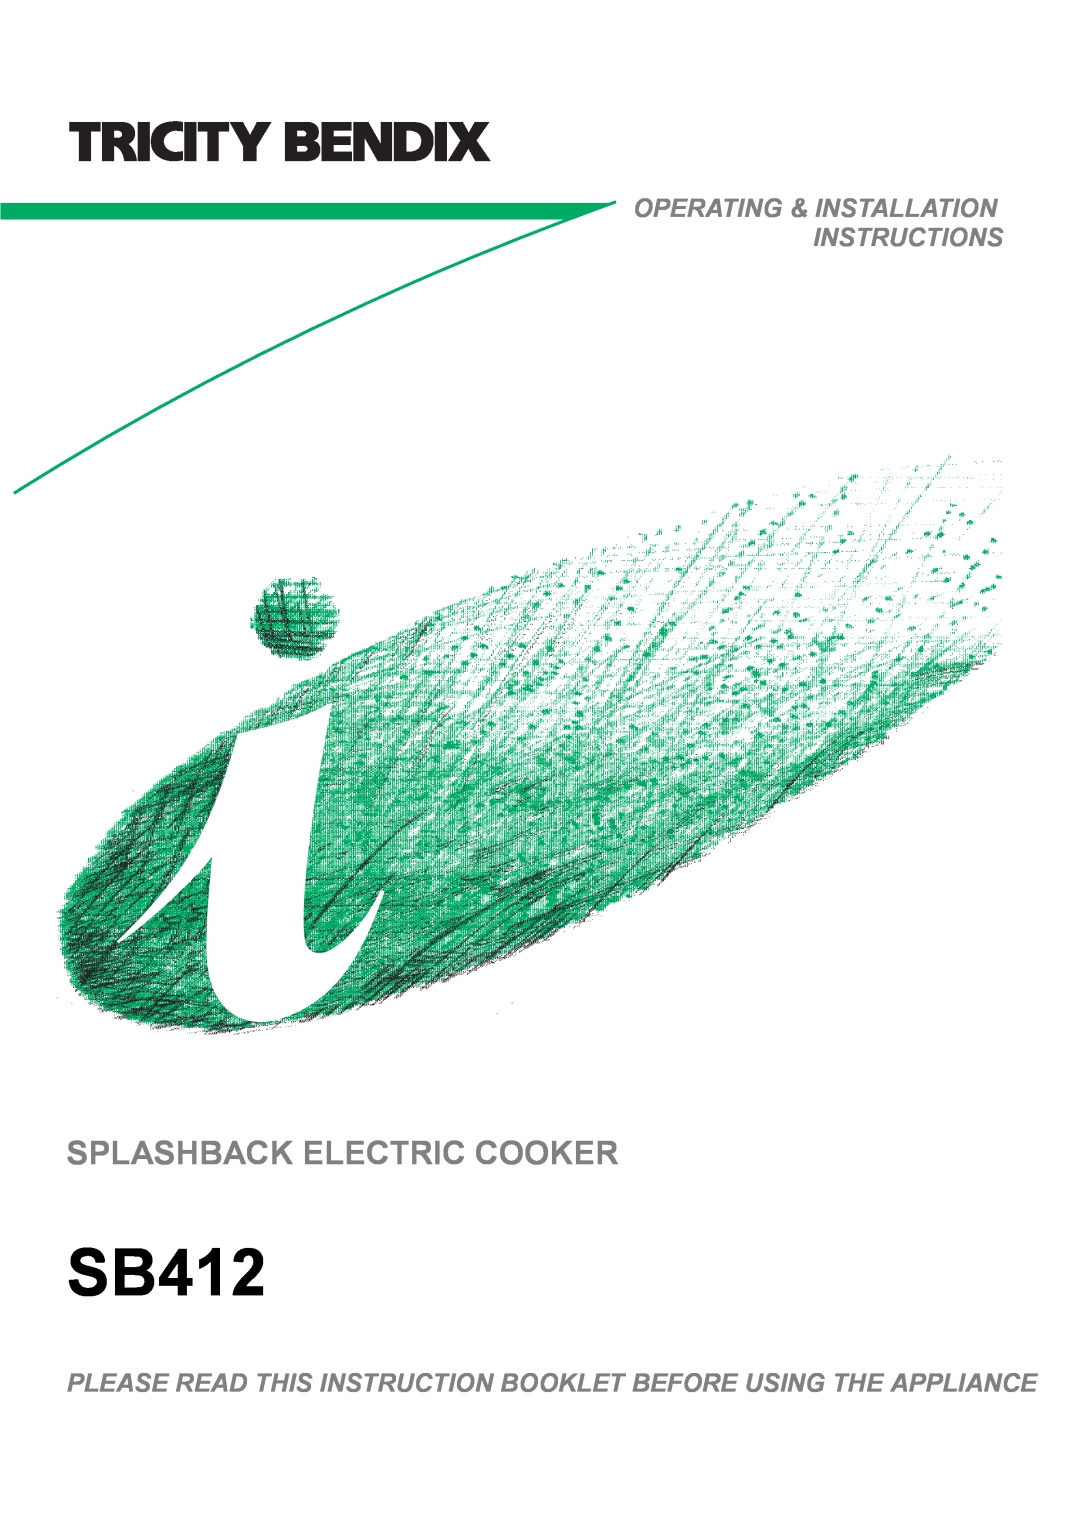 Tricity Bendix SB412 installation instructions Splashback Electric Cooker, Operating & Installation Instructions 